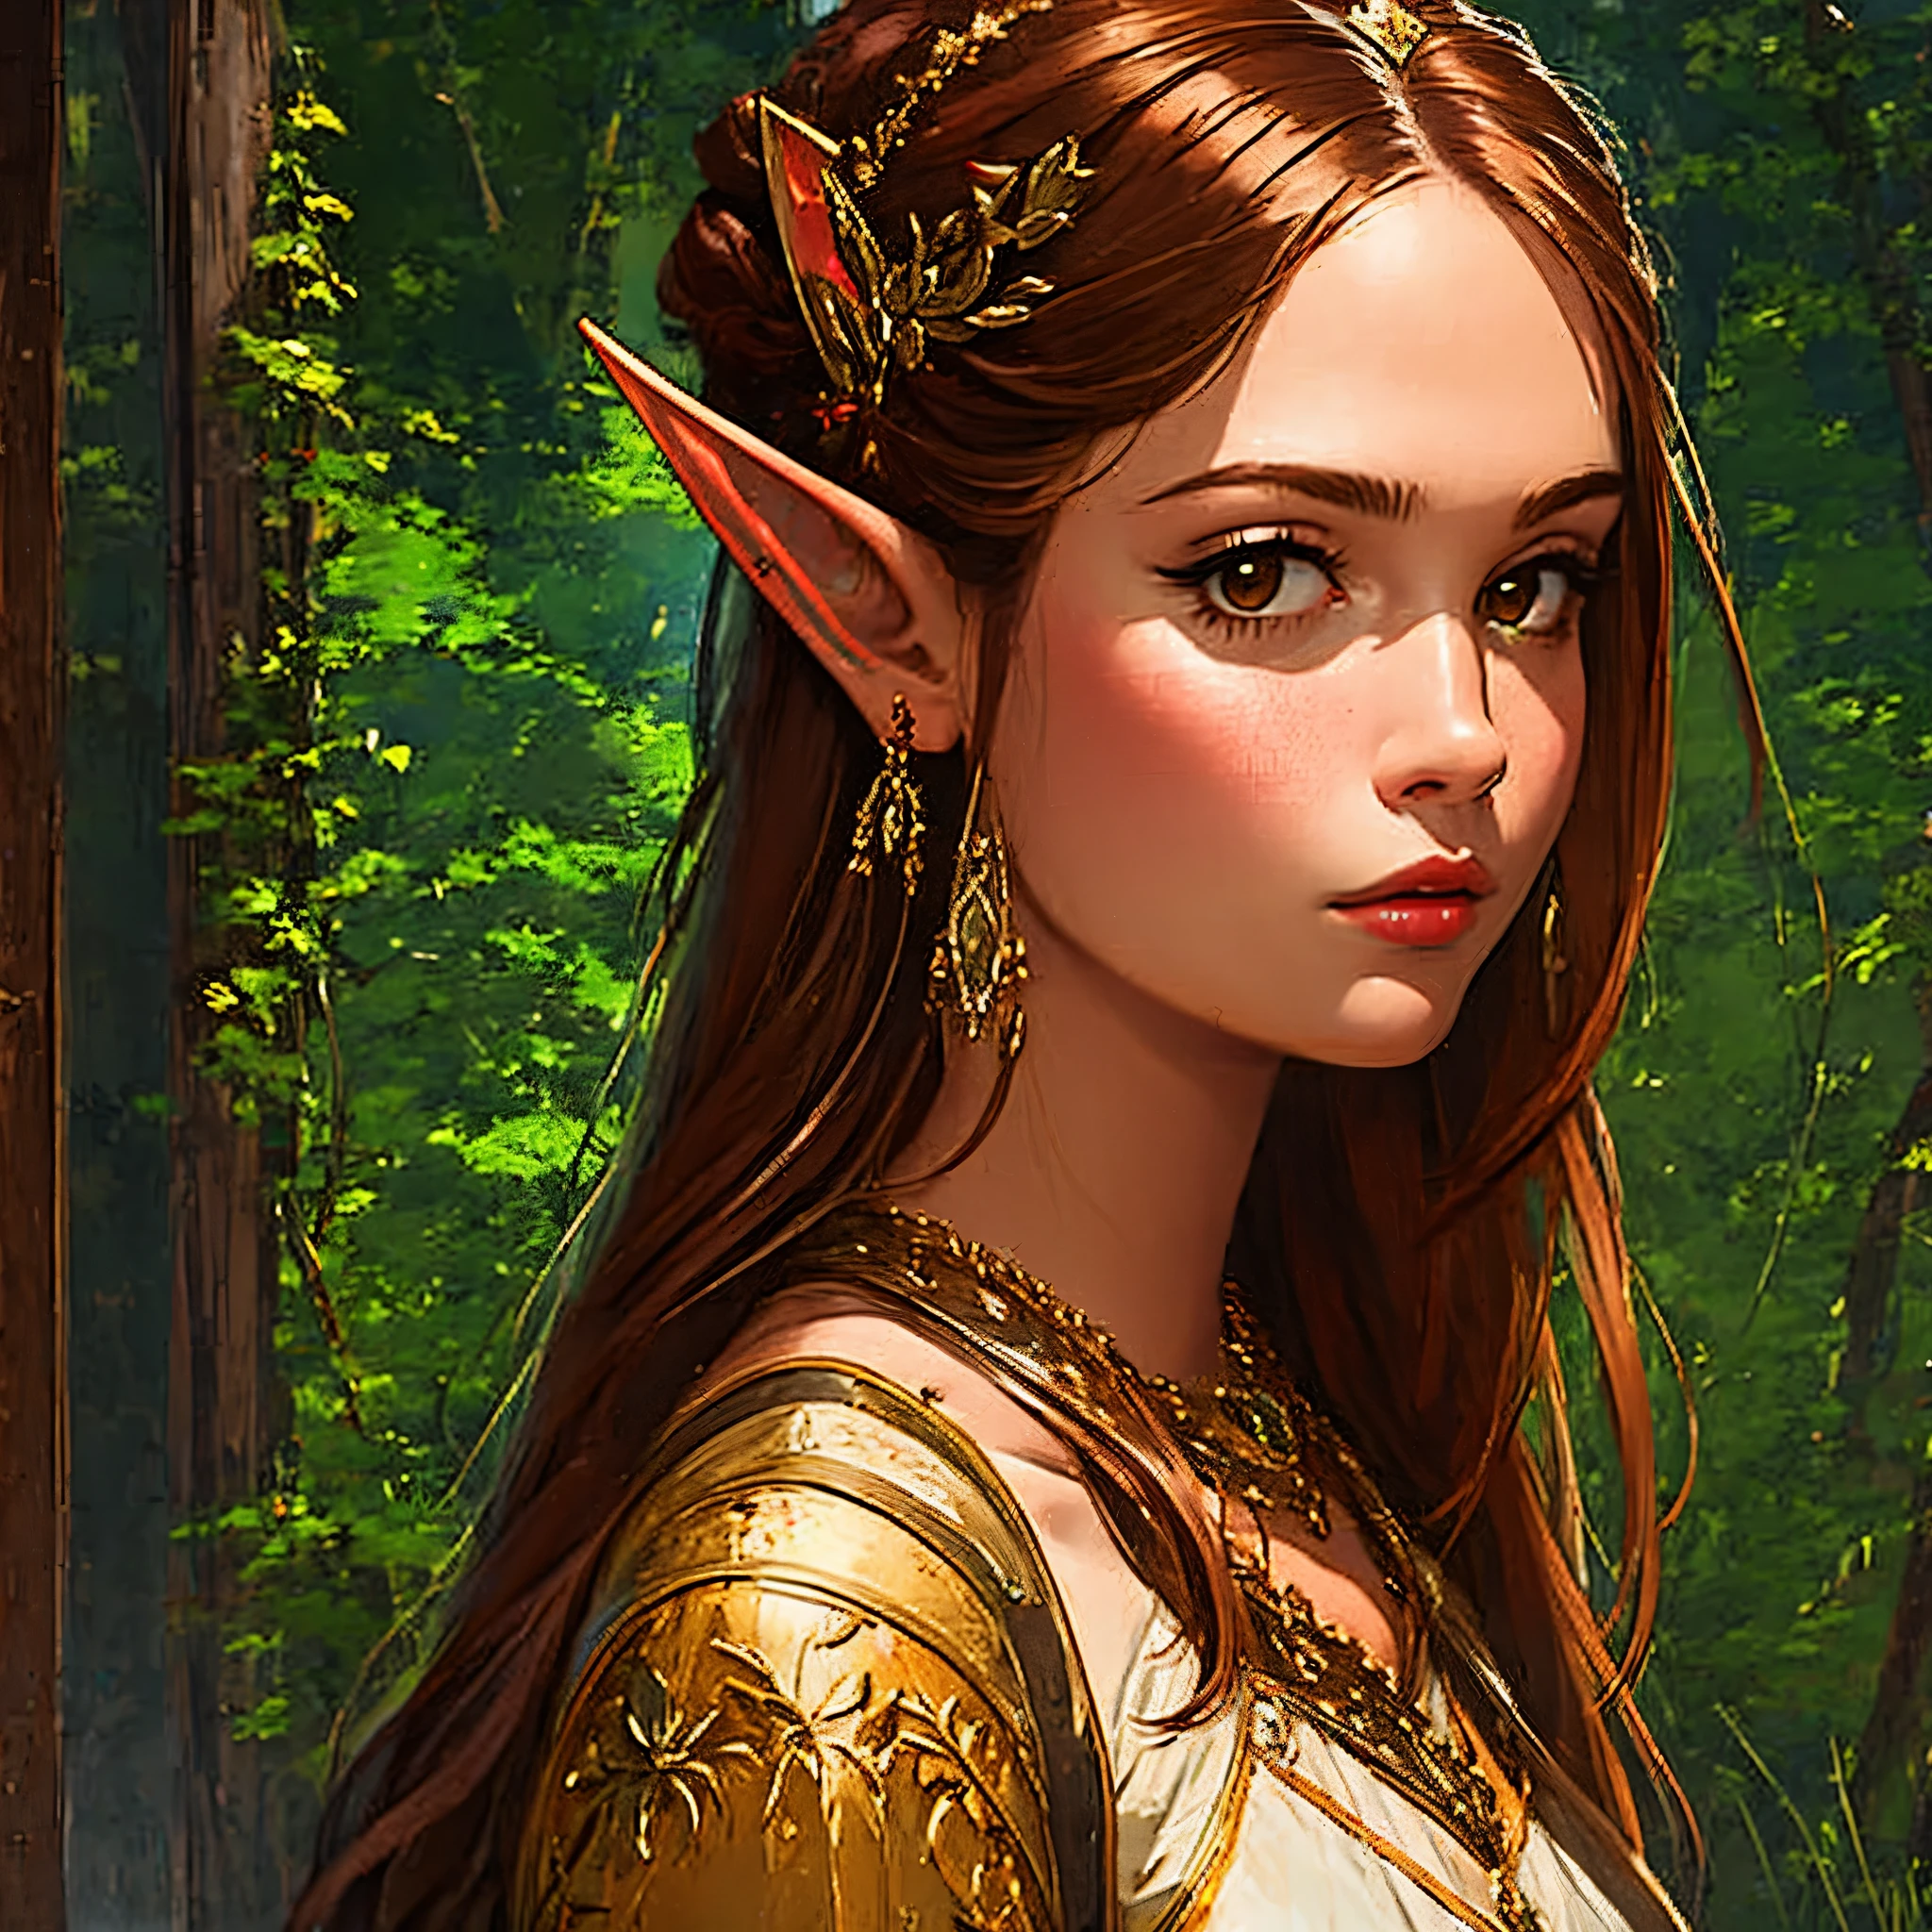 a close up of a elf girl with a green dress, elf girl, elf princess, very beautiful elven top model, hyperrealistic fantasy art, beautiful and elegant female elf, realistic fantasy render